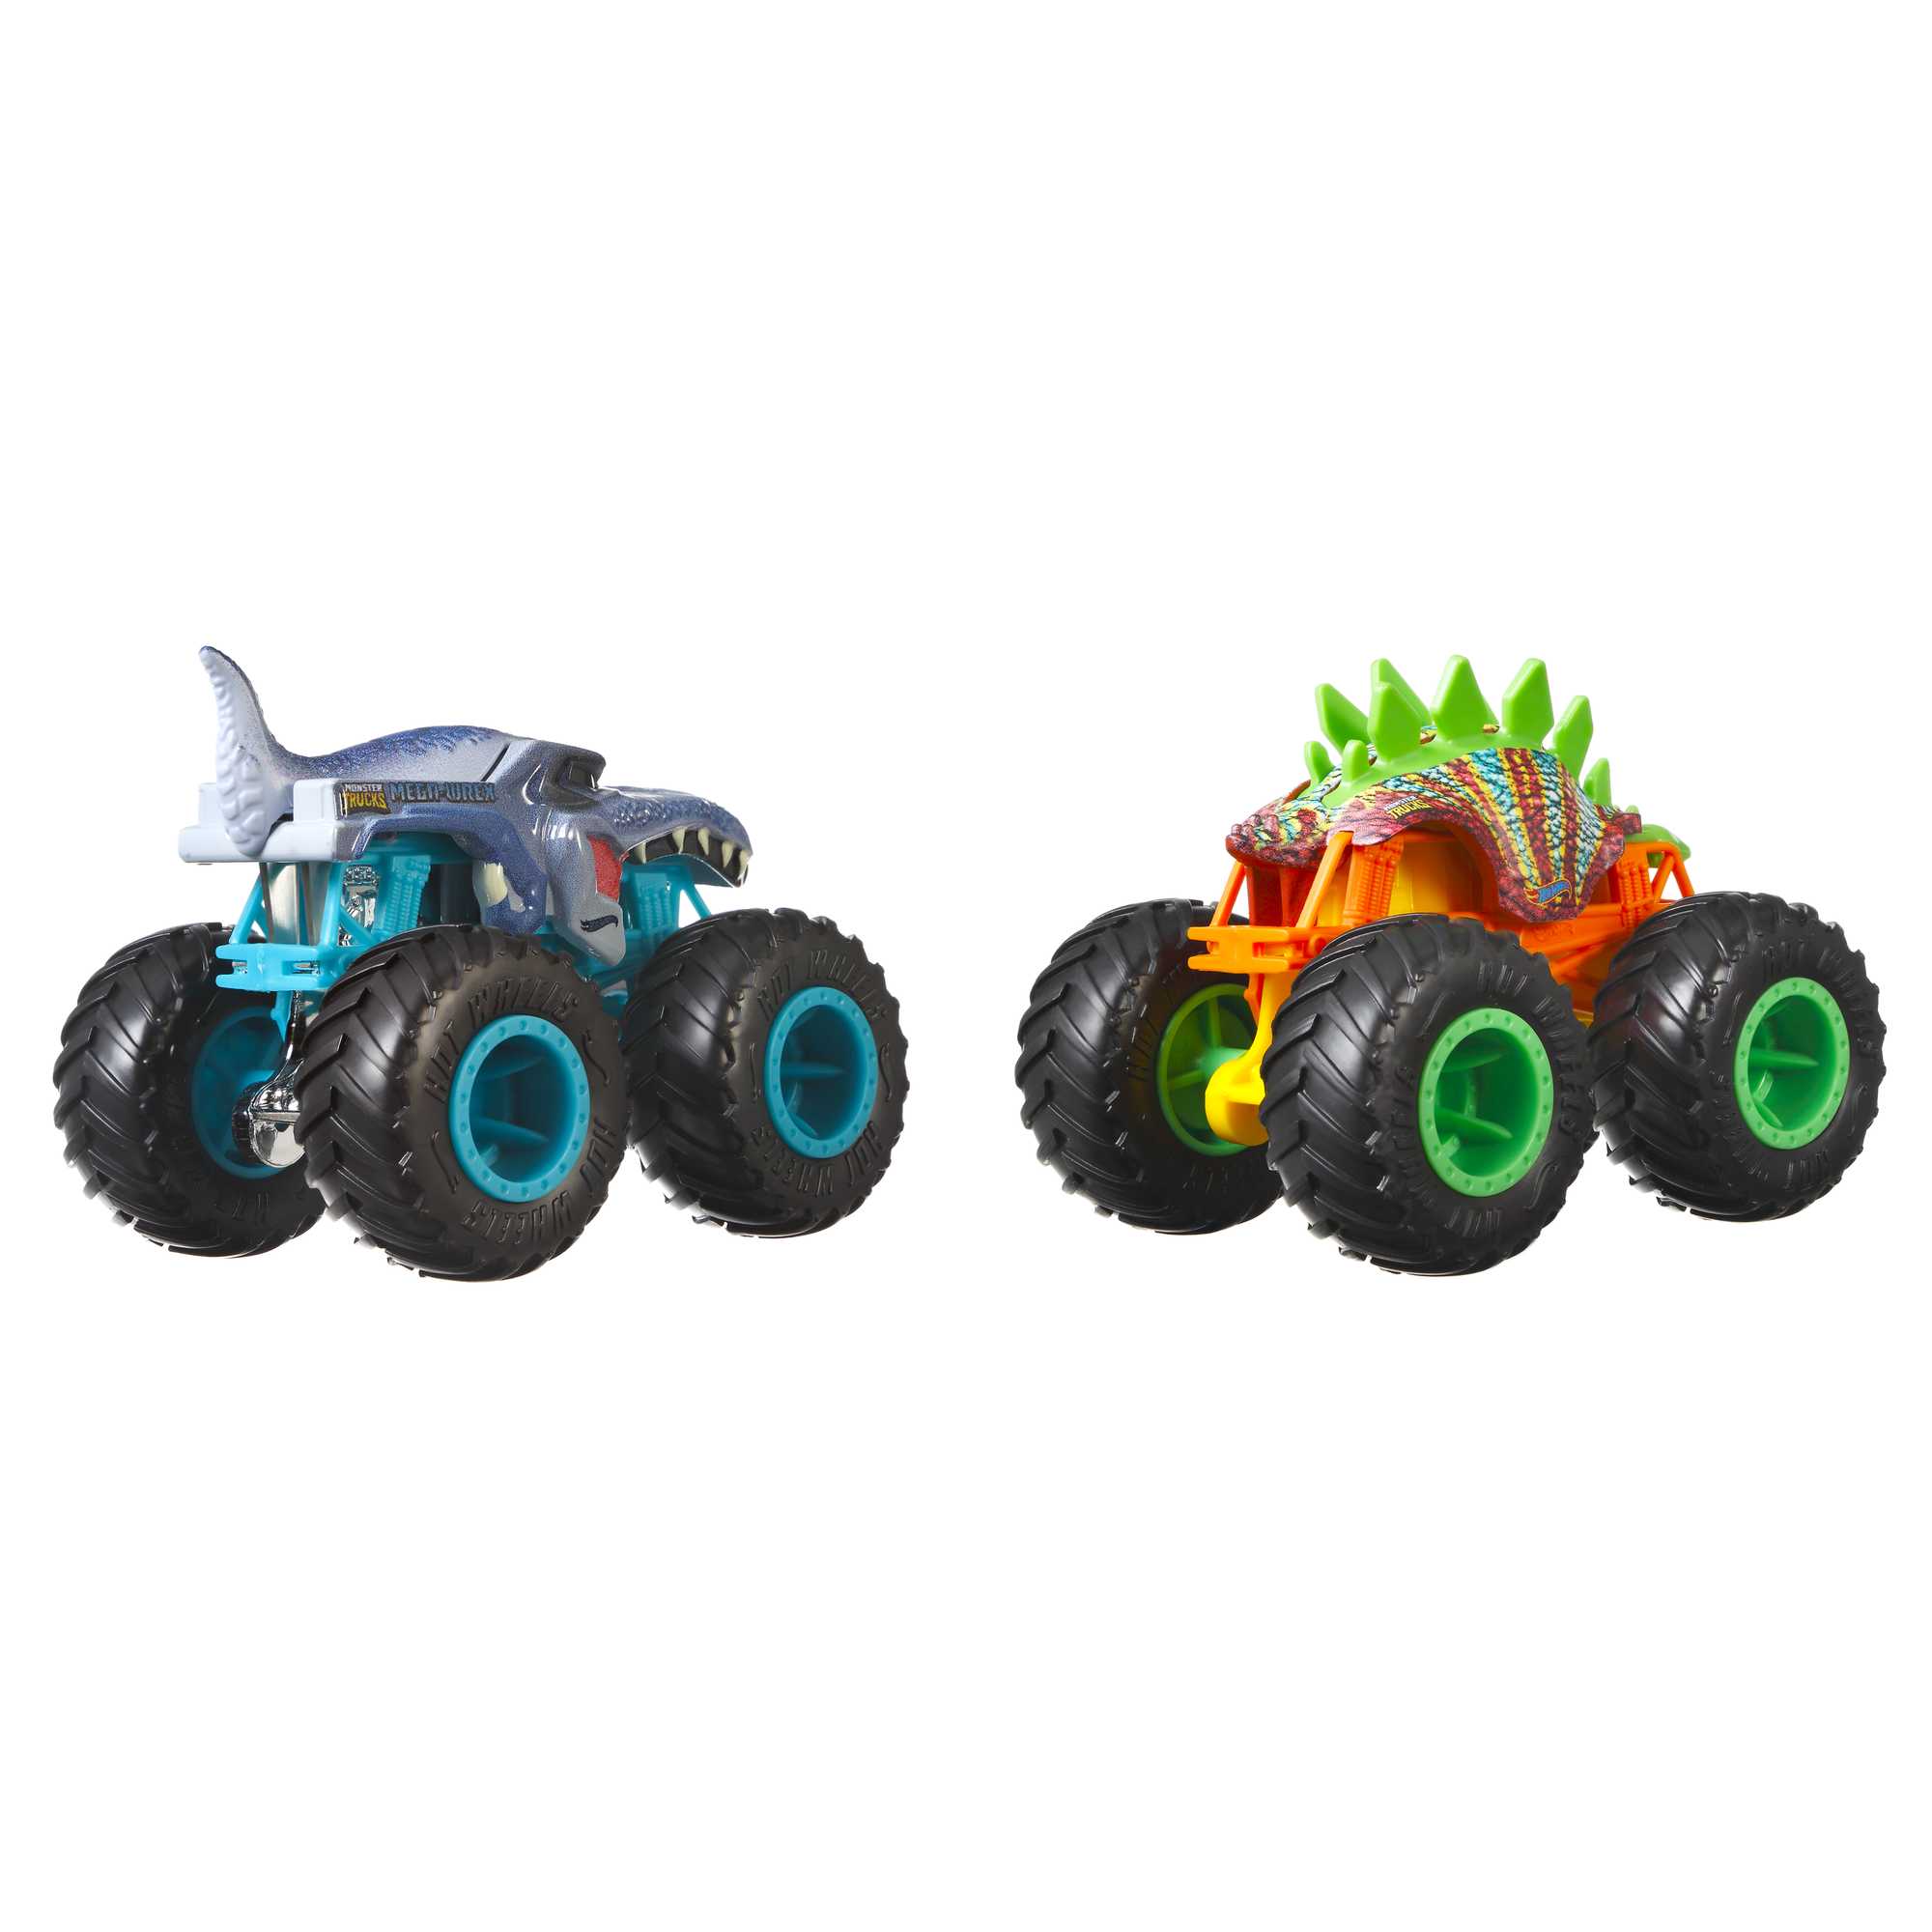 Carrinho Hot Wheels - Monster Trucks - Sortido - 1:64 - Mattel -  superlegalbrinquedos